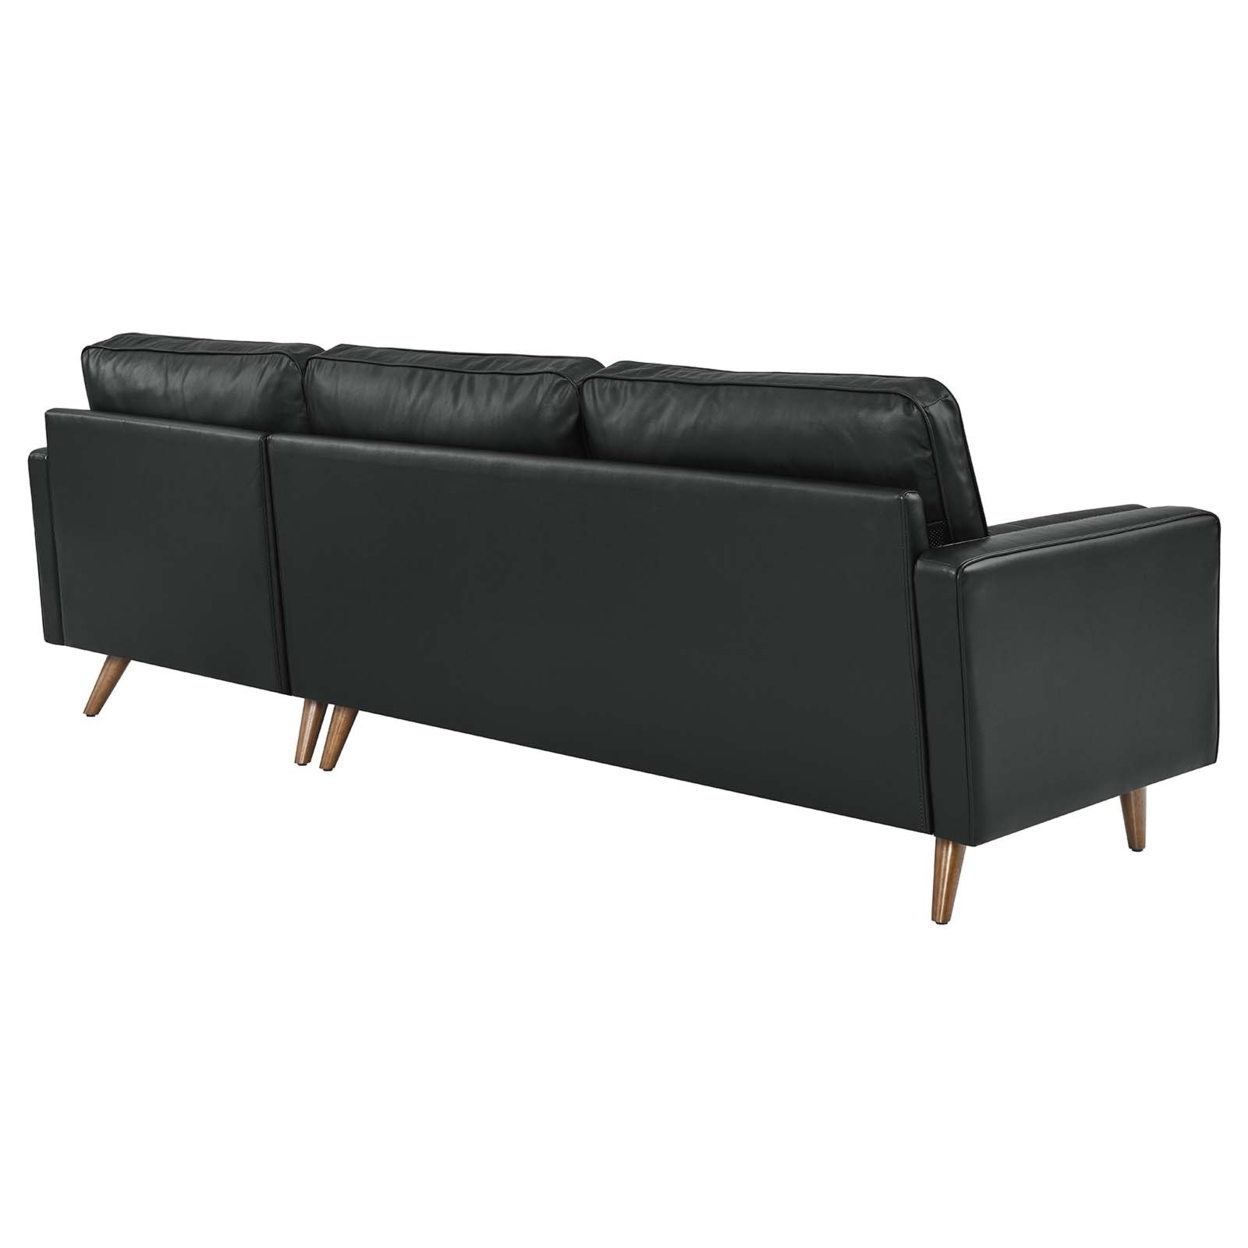 Valour 98 Leather Sectional Sofa, Black